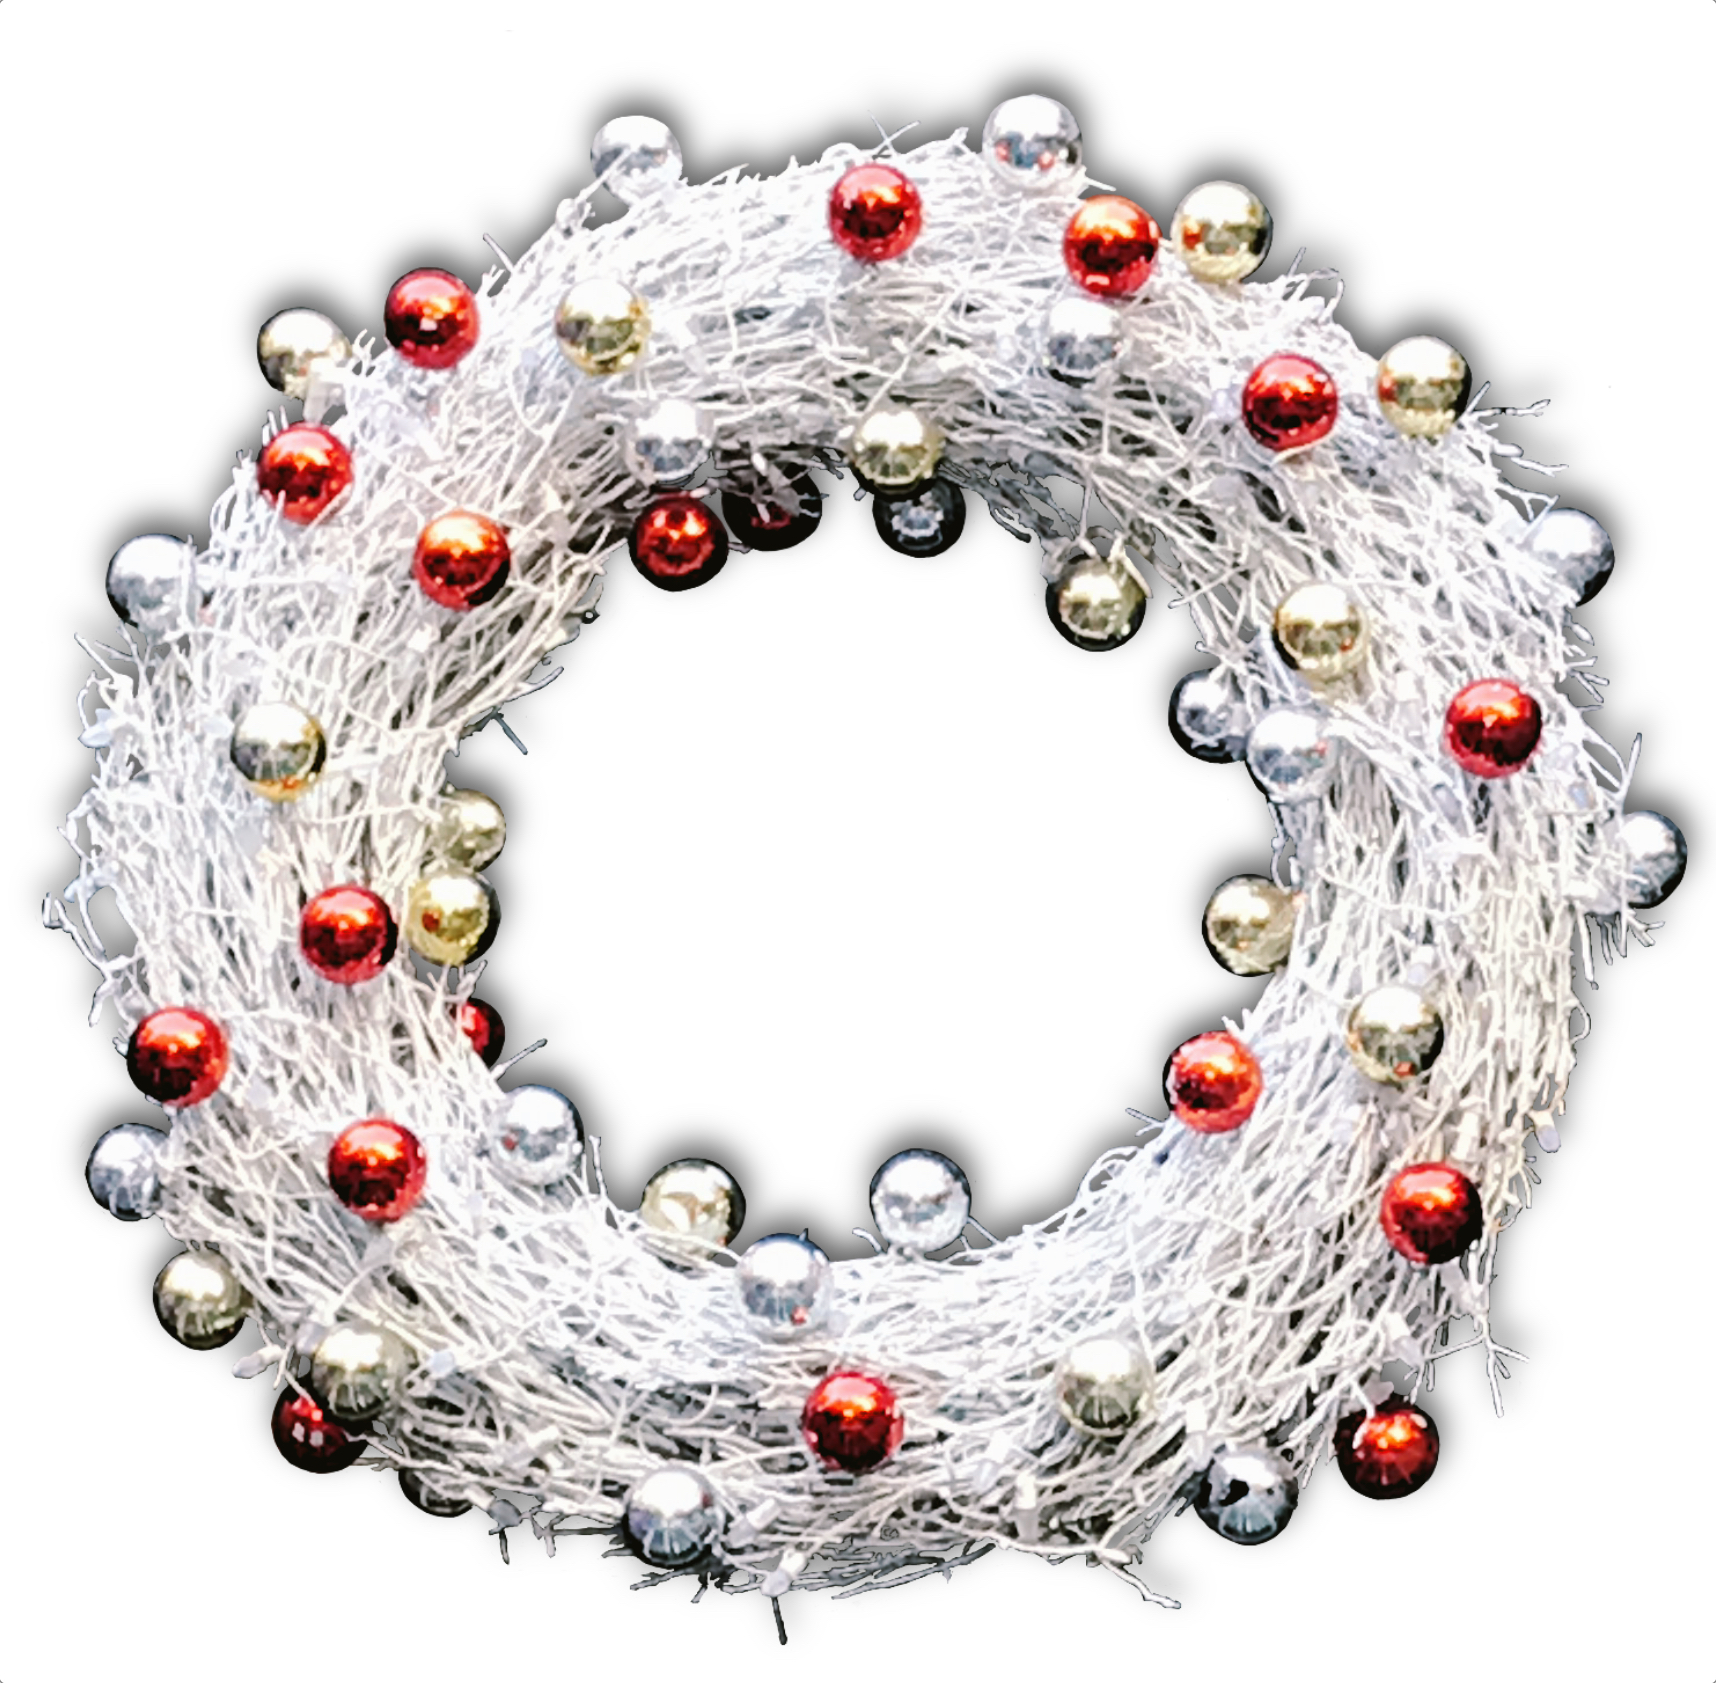 Barrango manzanita wreath white Christmas wreath